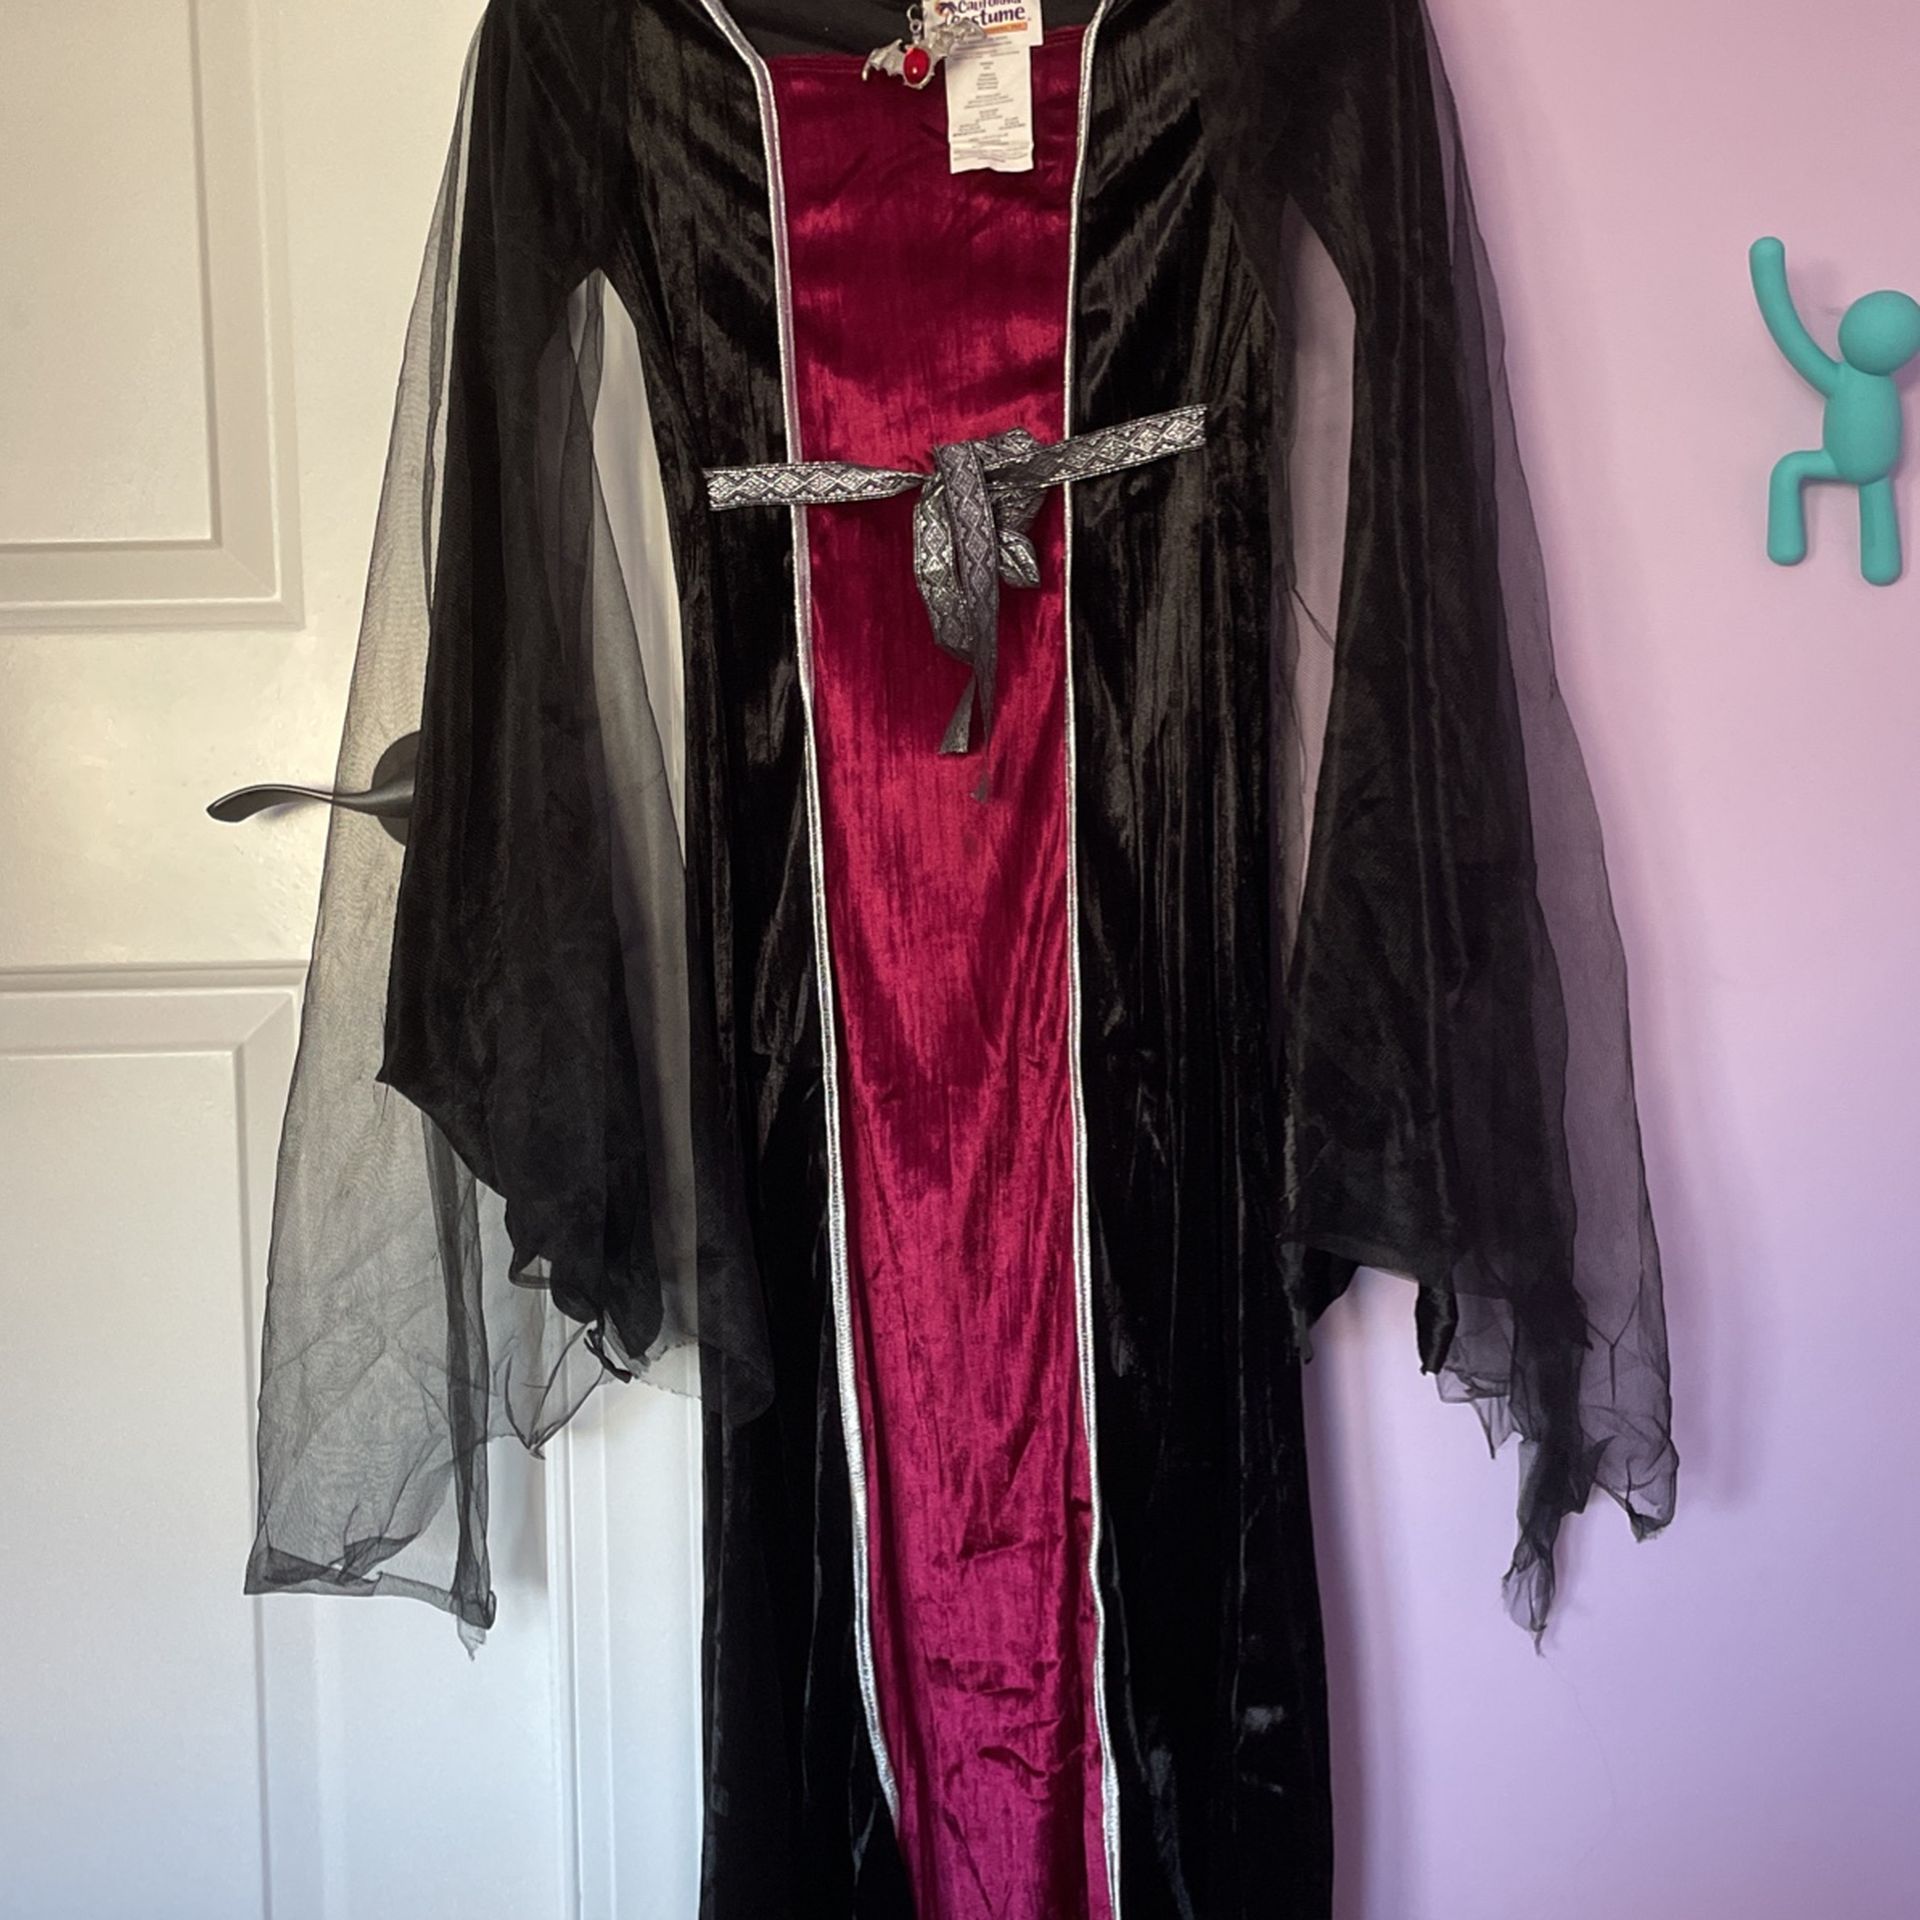 Girls Vampire Halloween Costume Size: Large (10-12)